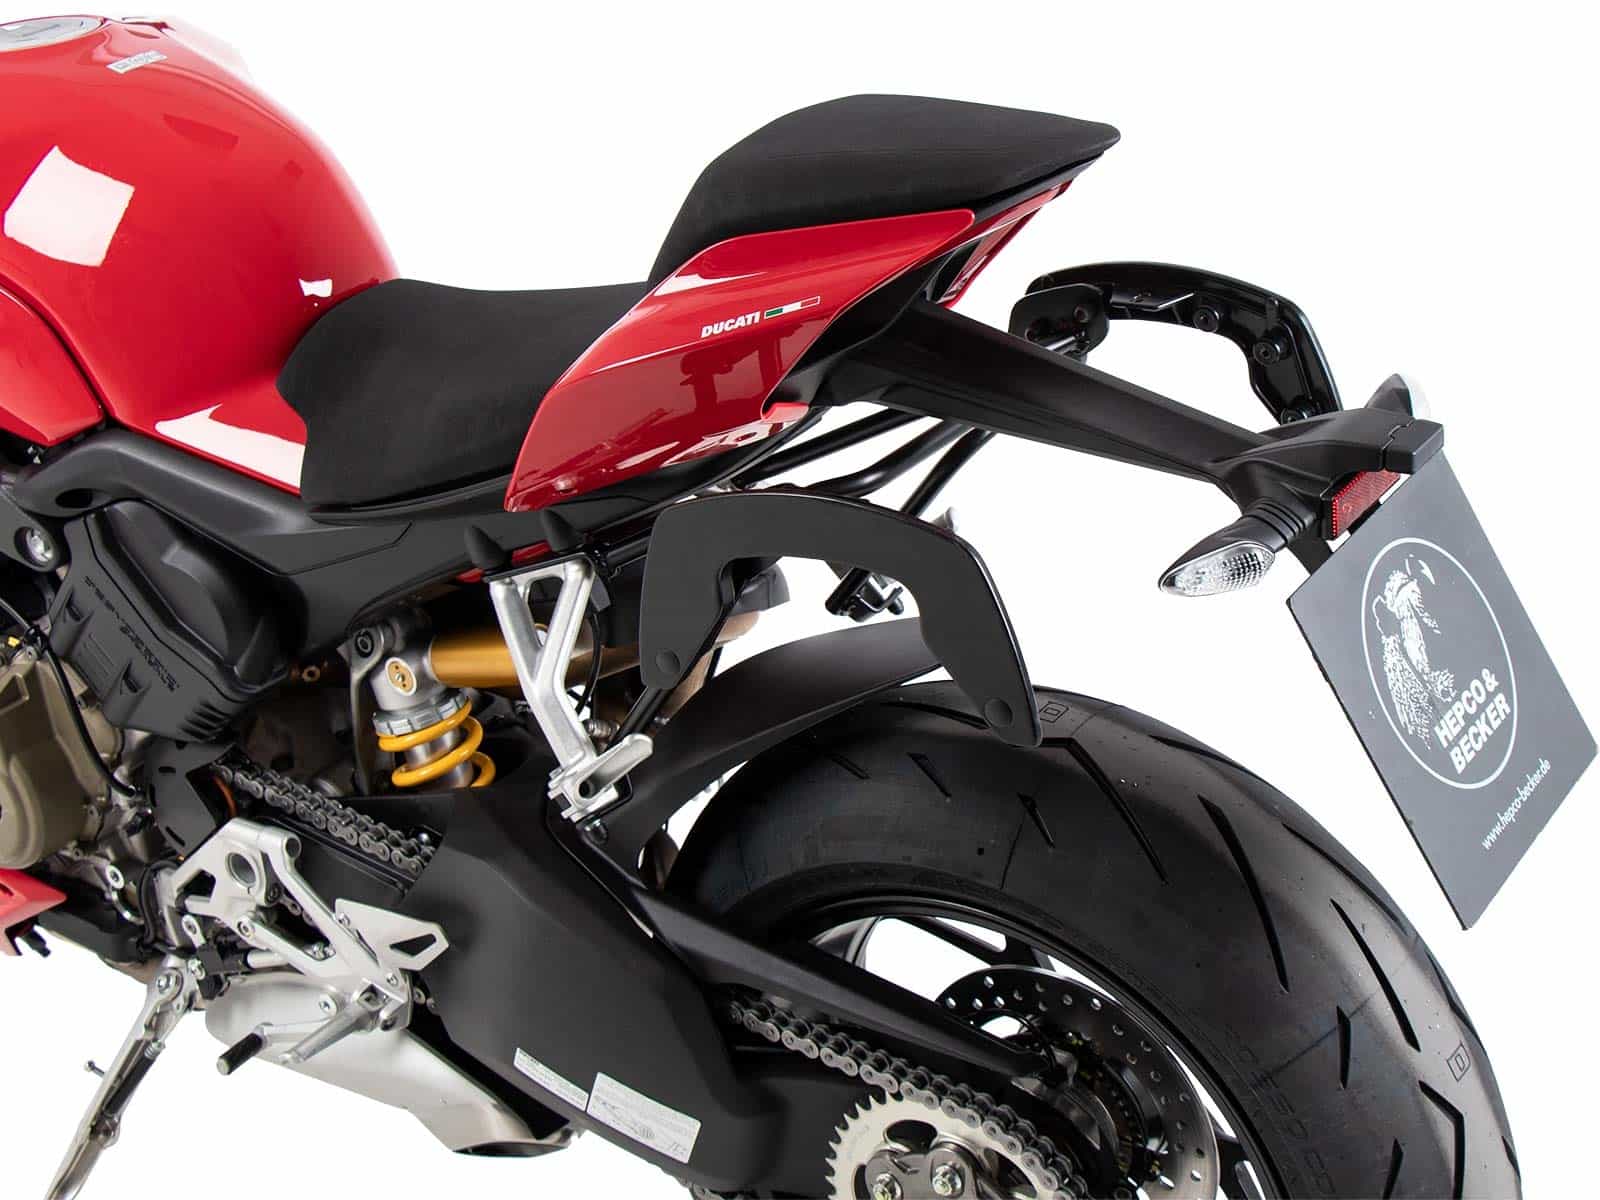 C-Bow sidecarrier for Ducati Streetfighter V4 / S (2020-)